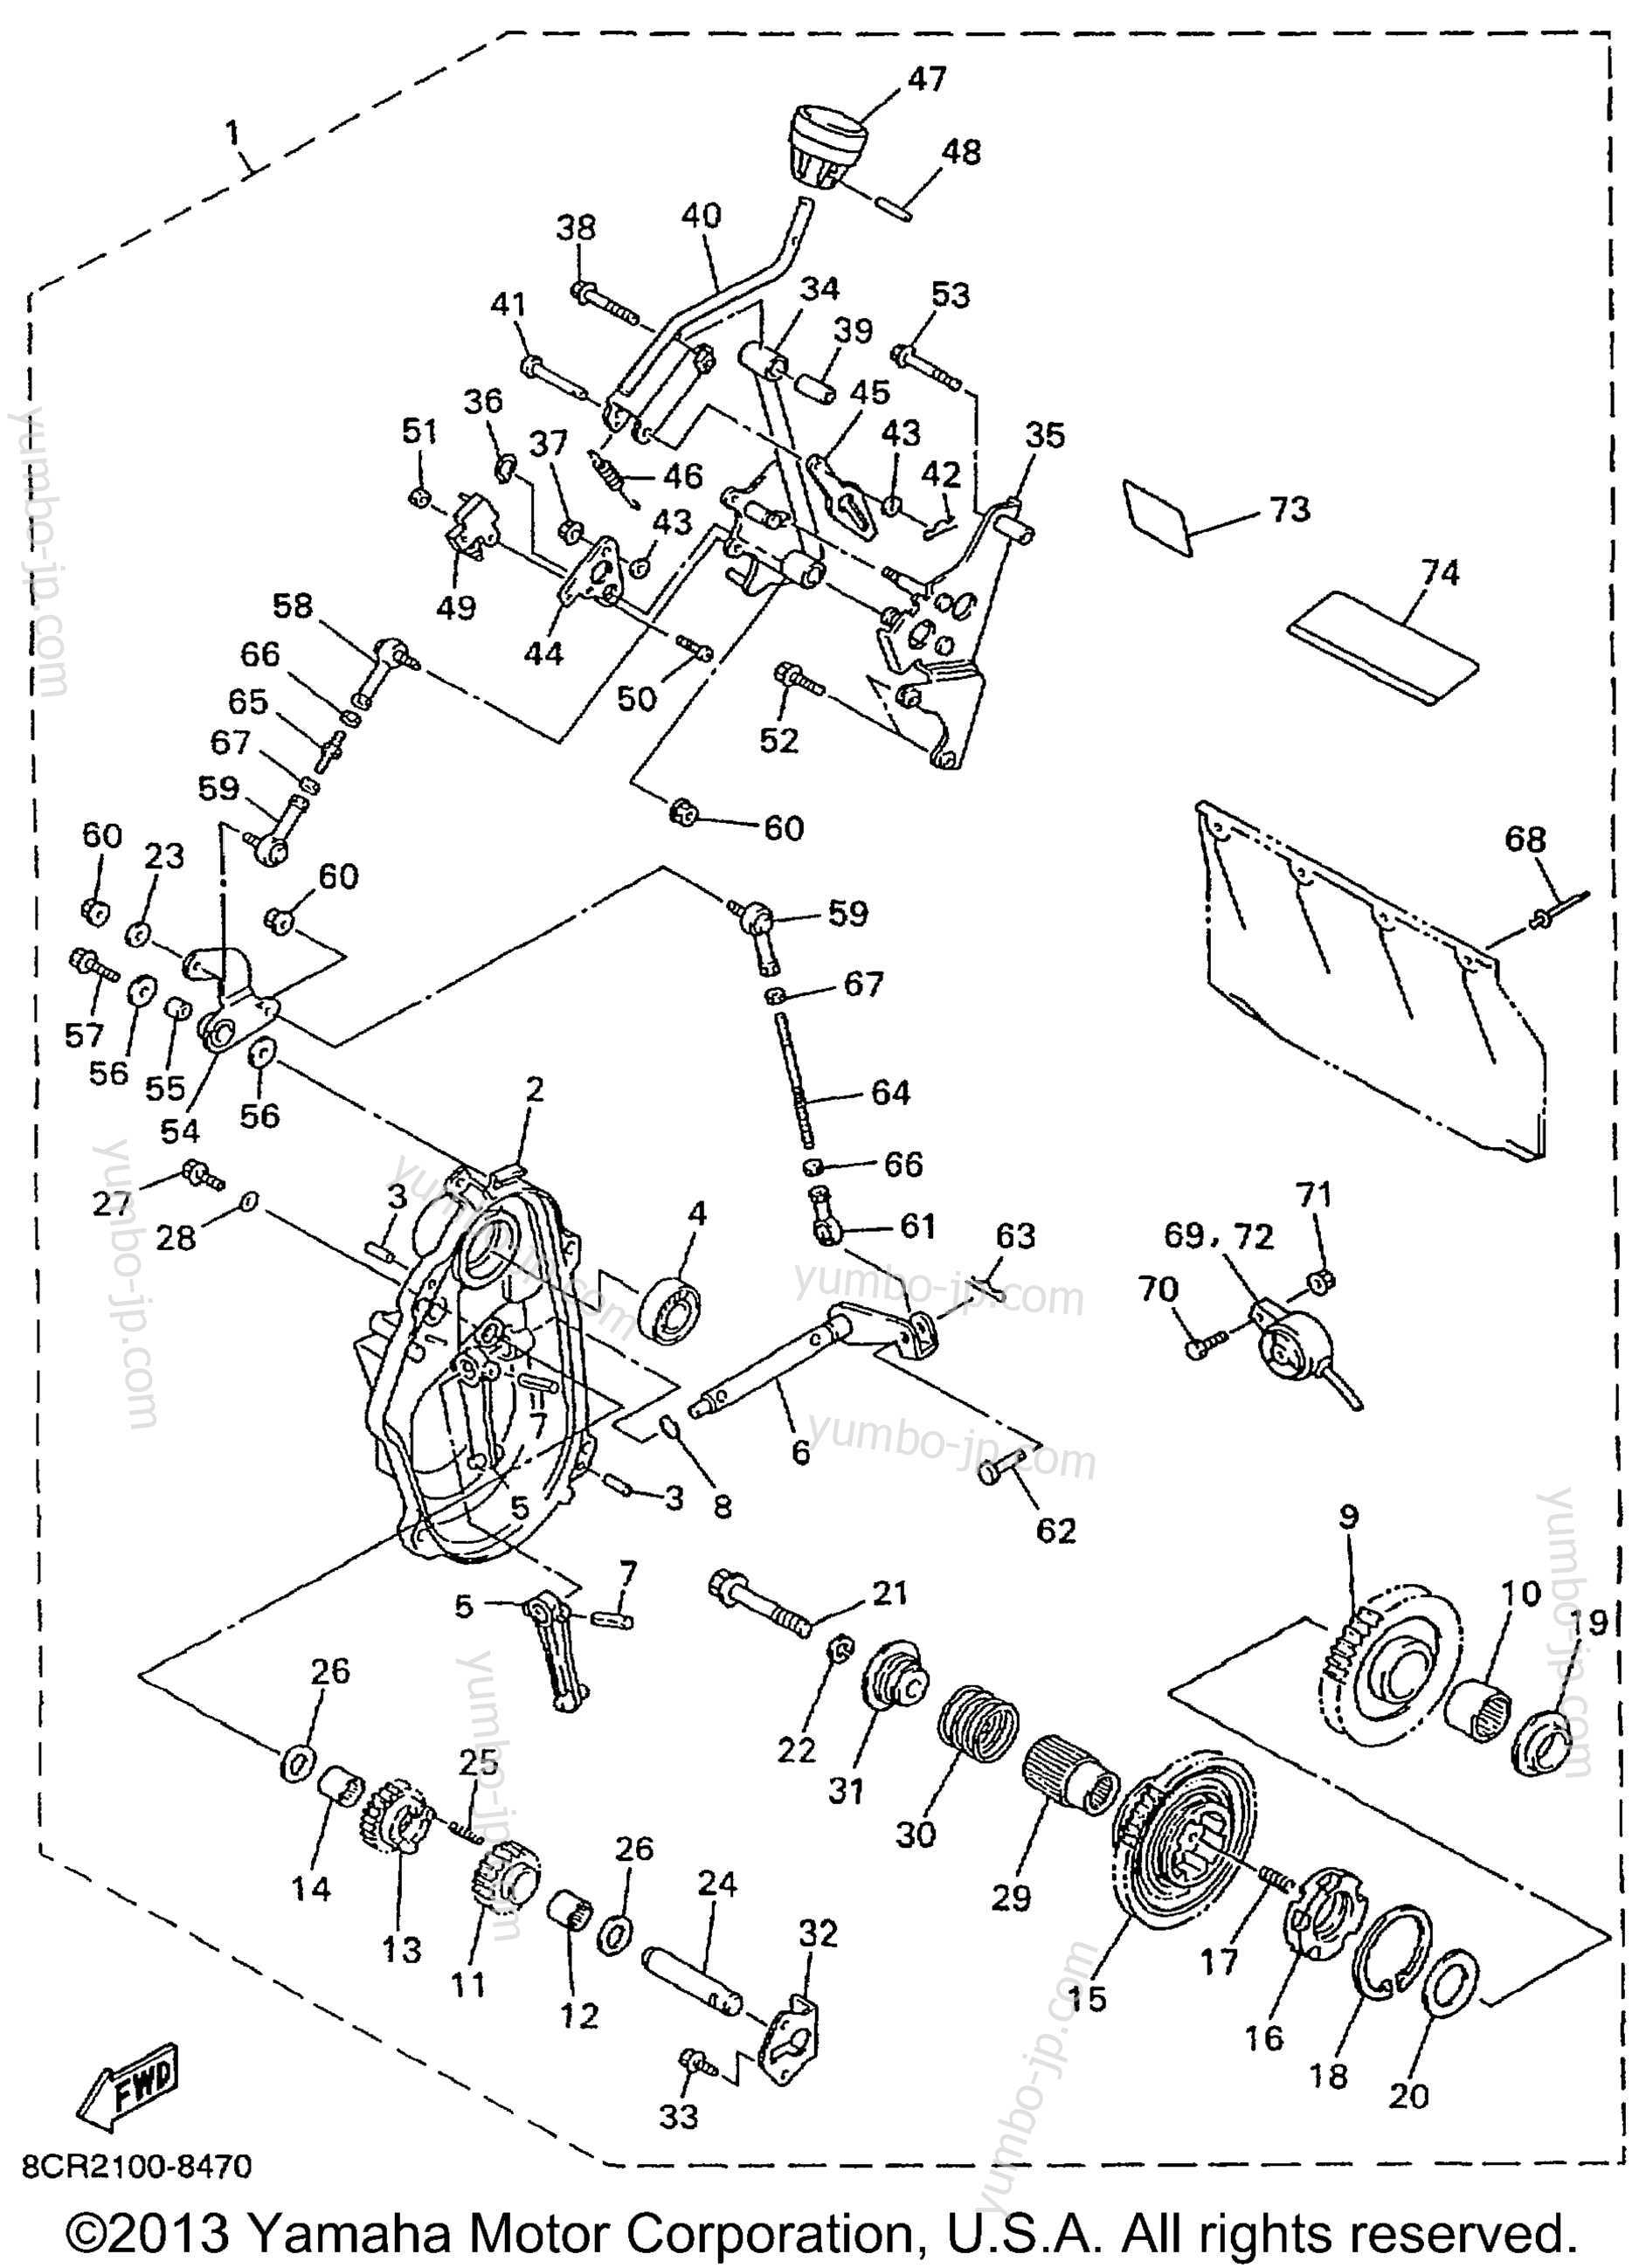 Alternate Reverse Gear Kit for snowmobiles YAMAHA VMAX 700 SXS (OHLINS FR SHOCKS) (VX700SXSB) 1998 year